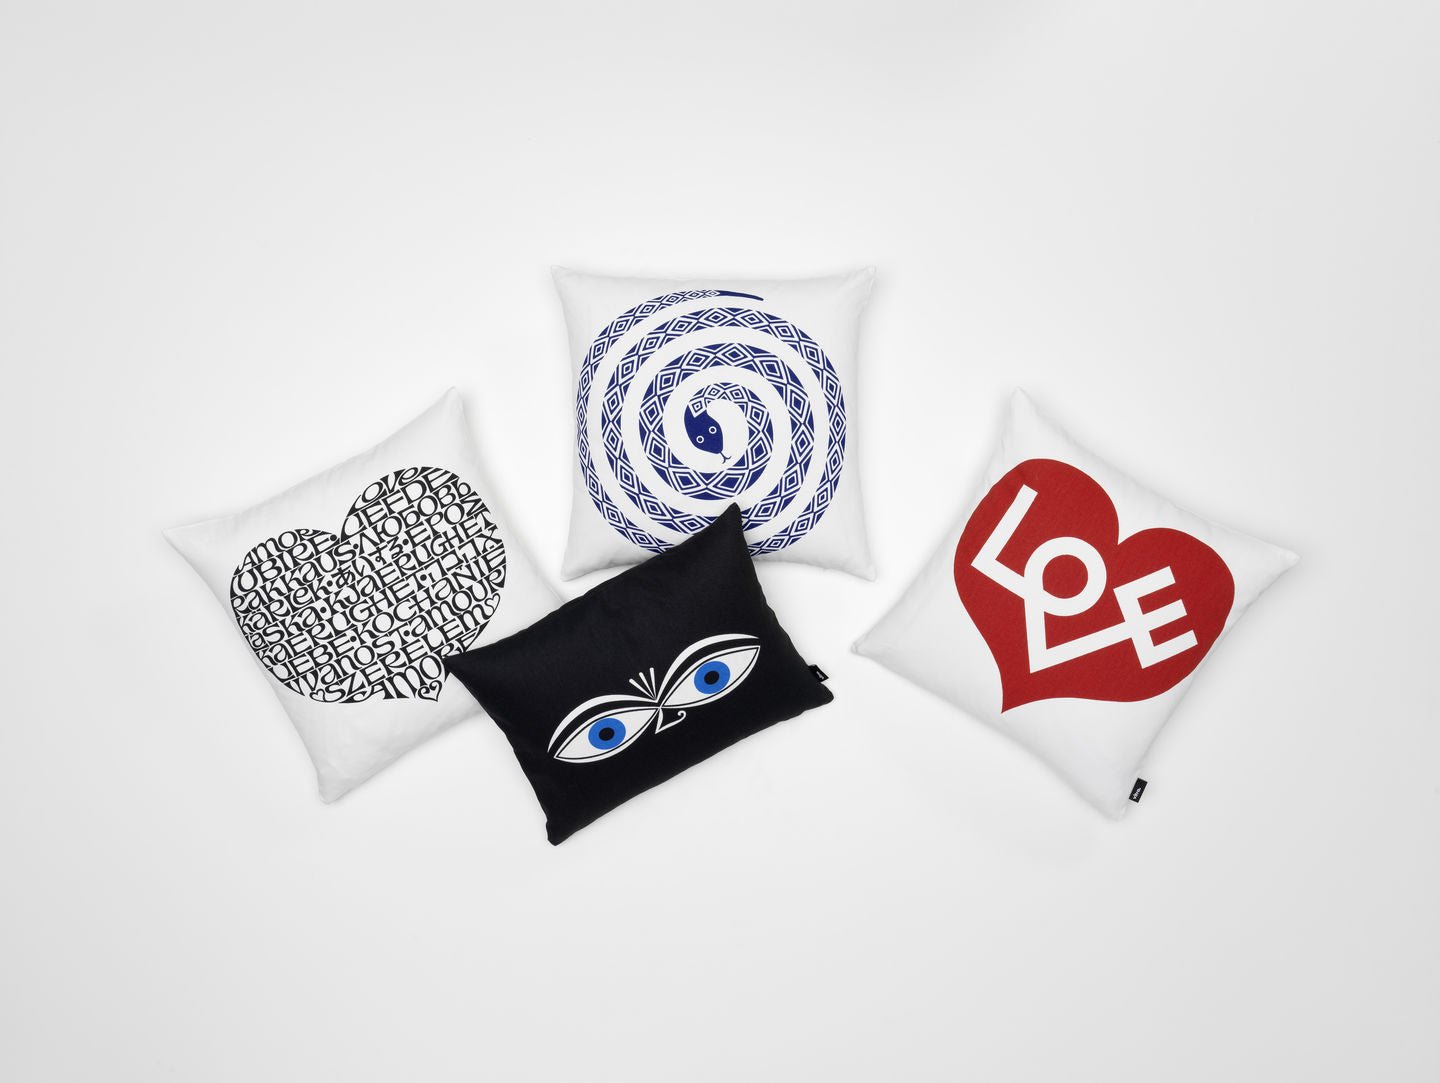 Graphic Print Pillows, Love Heart - Vitra Design Museum Shop